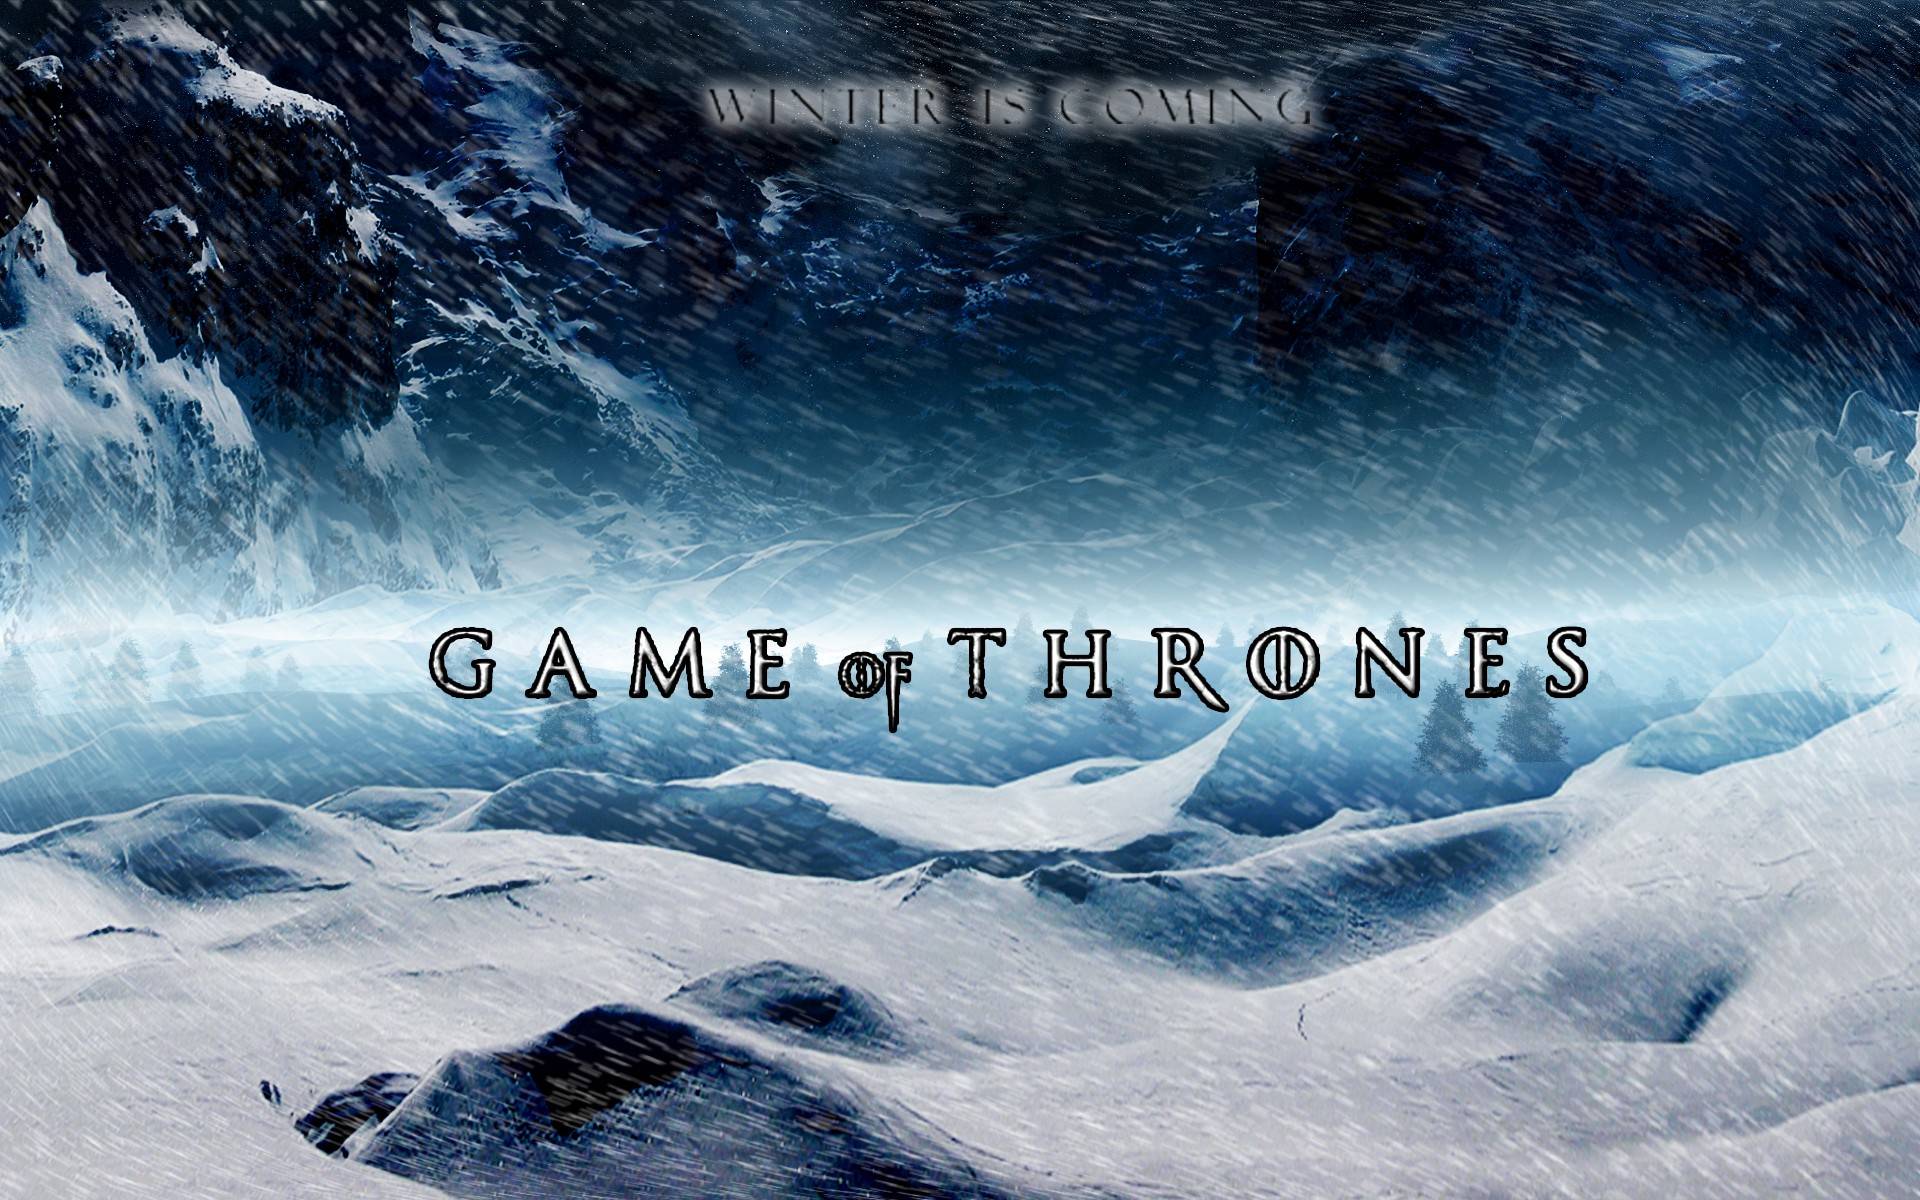 Winter is coming, House Stark of Thrones wallpaper